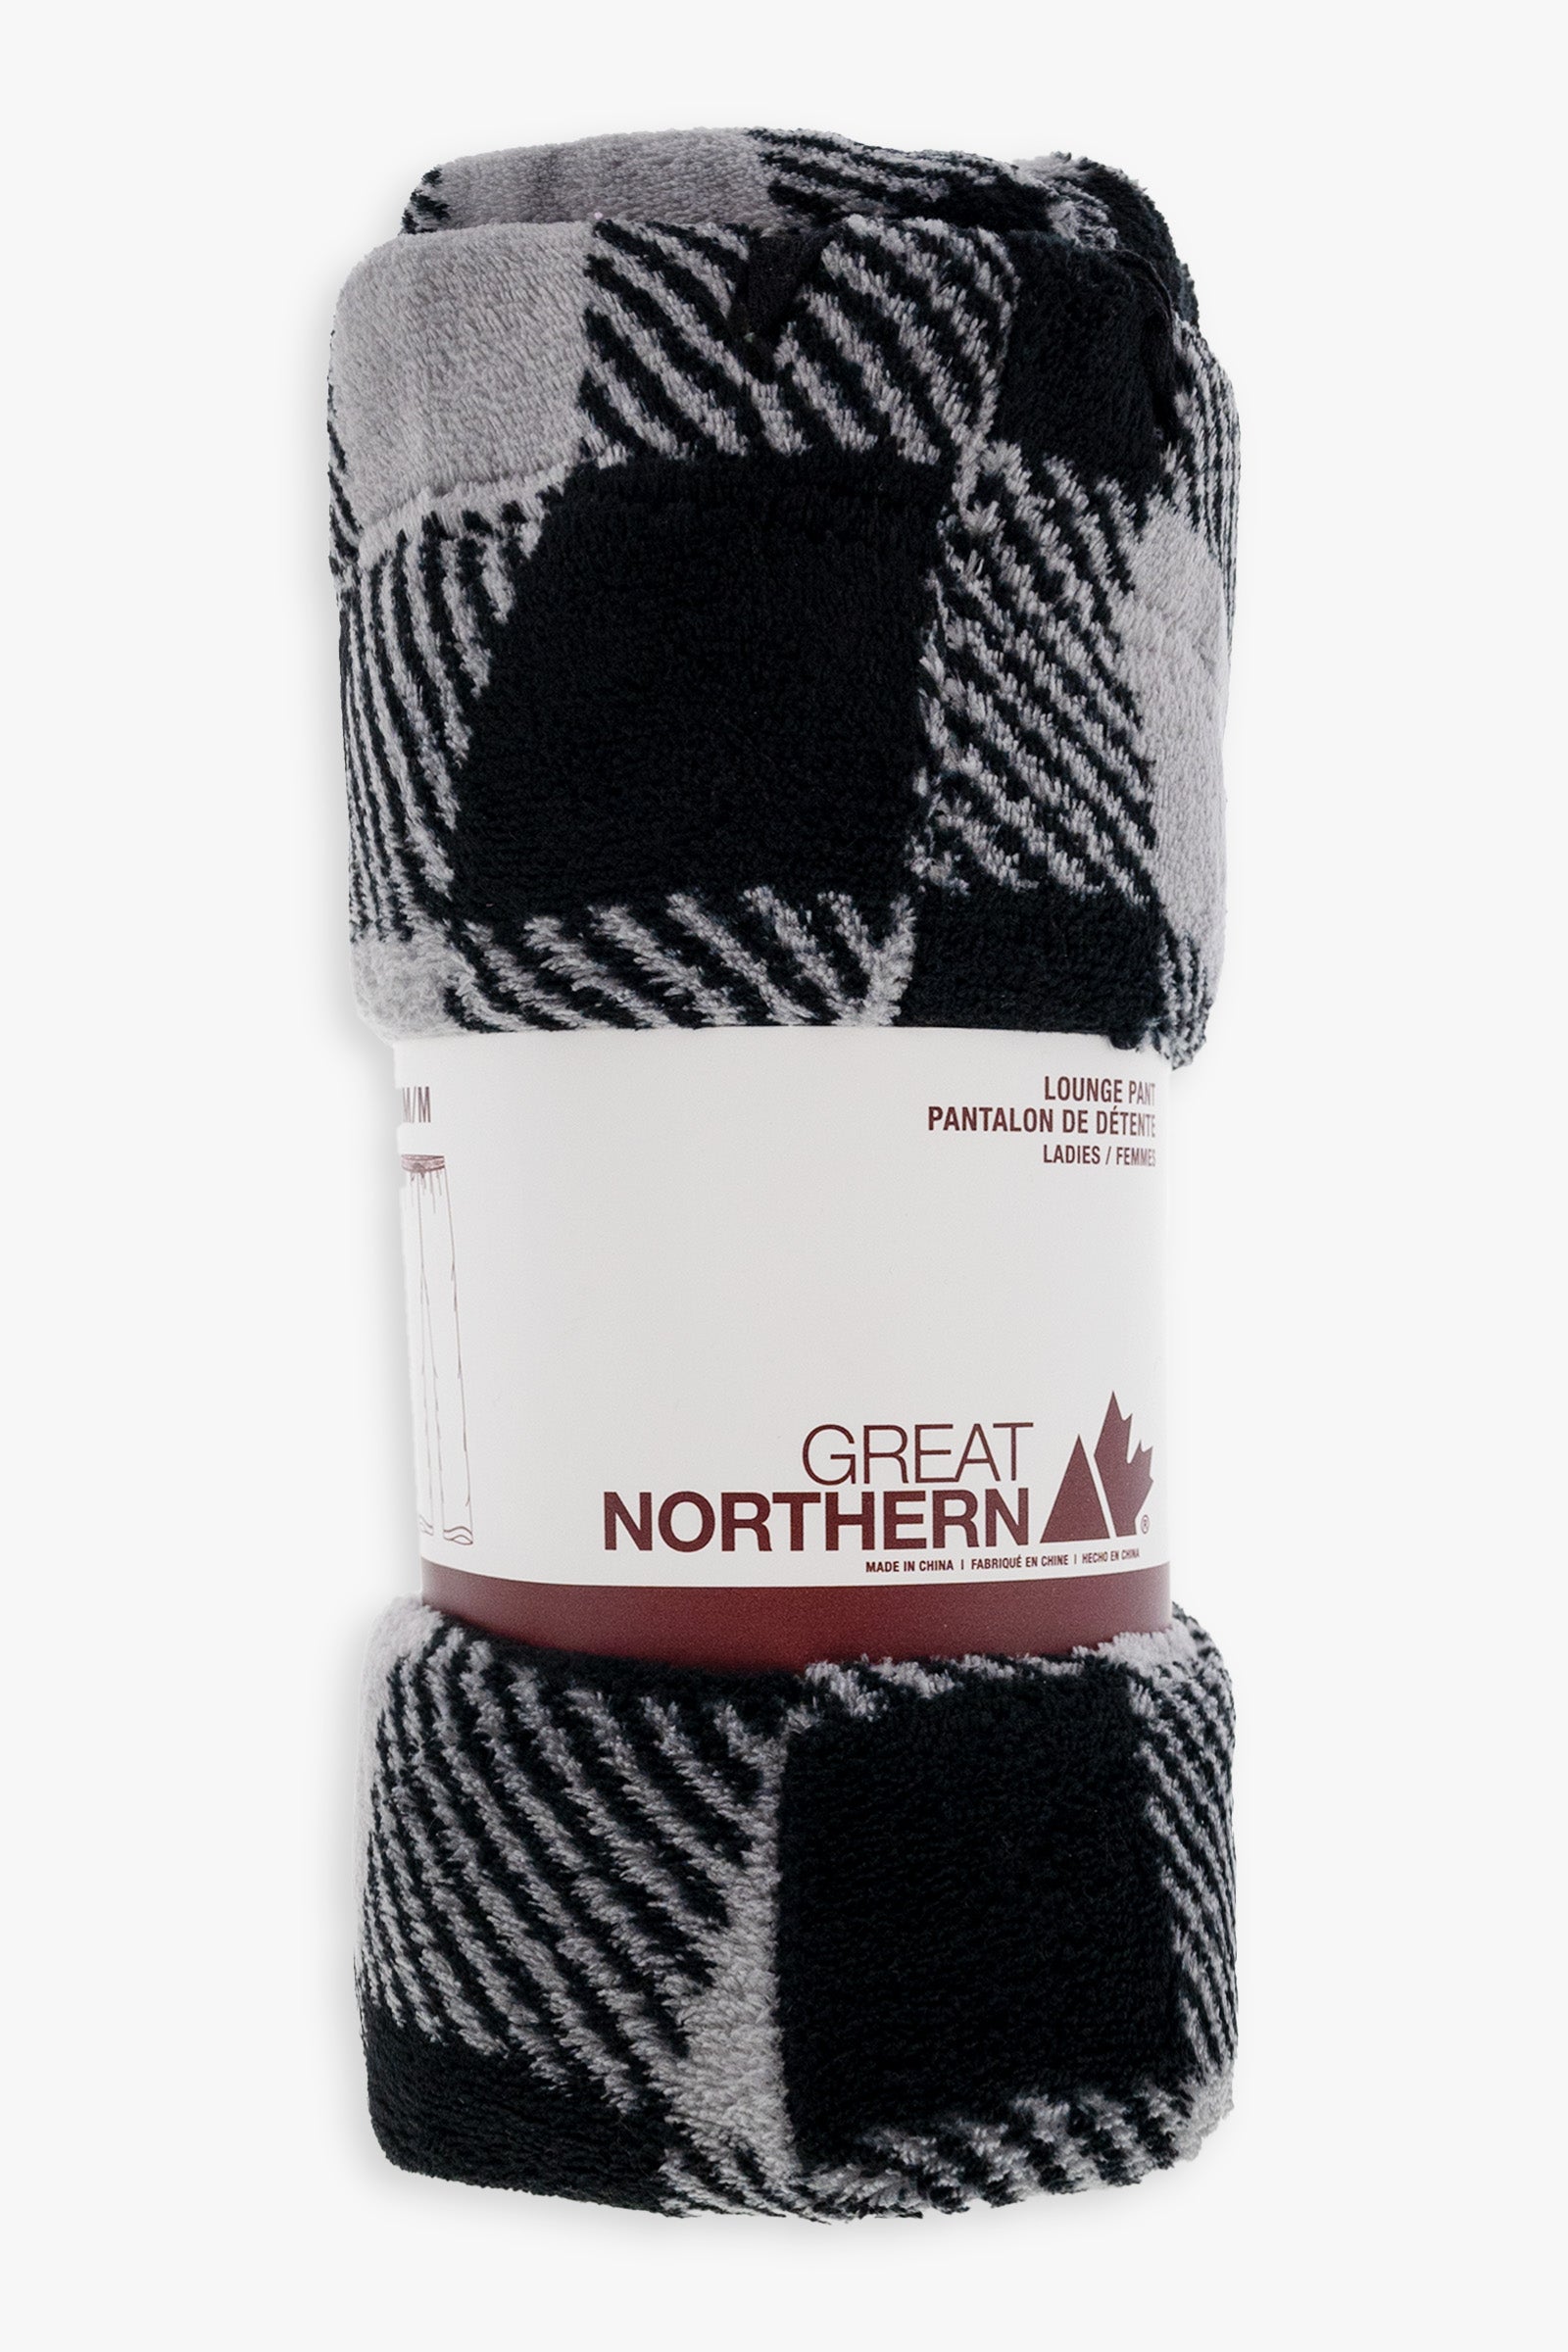 Great Northern Polar Fleece Men's Lounge Pants